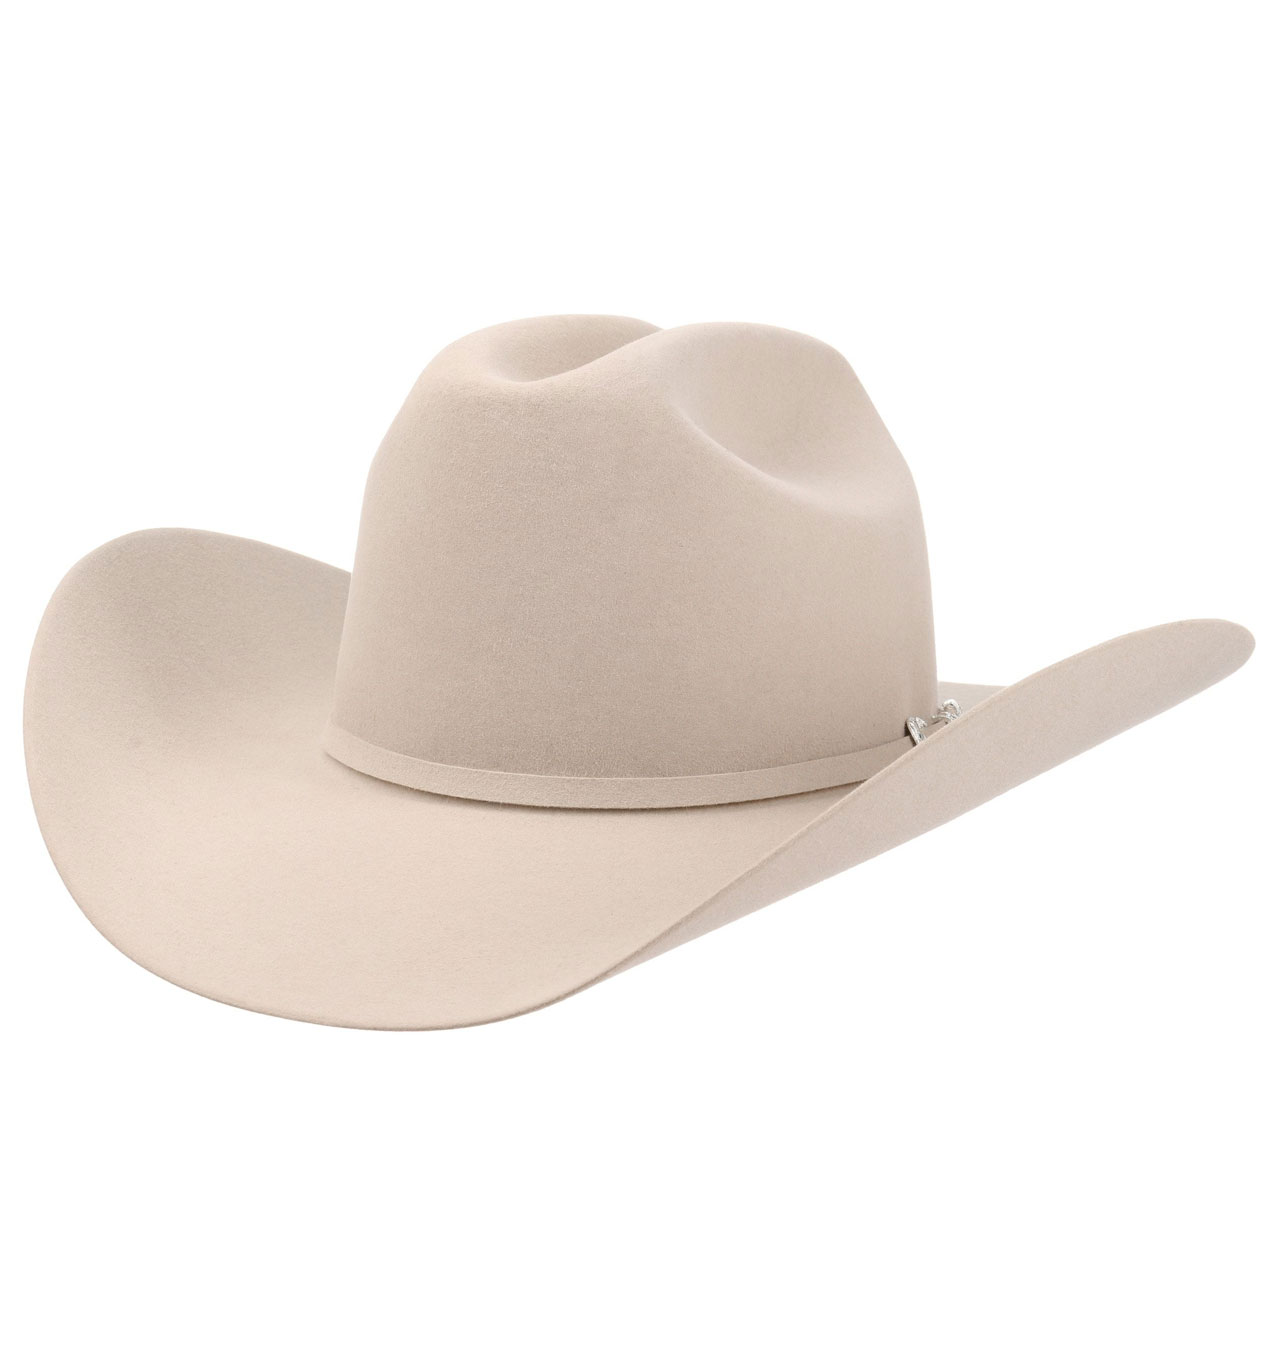 Stetson - 5X Lariat Western Cowboy Hat - Ivory